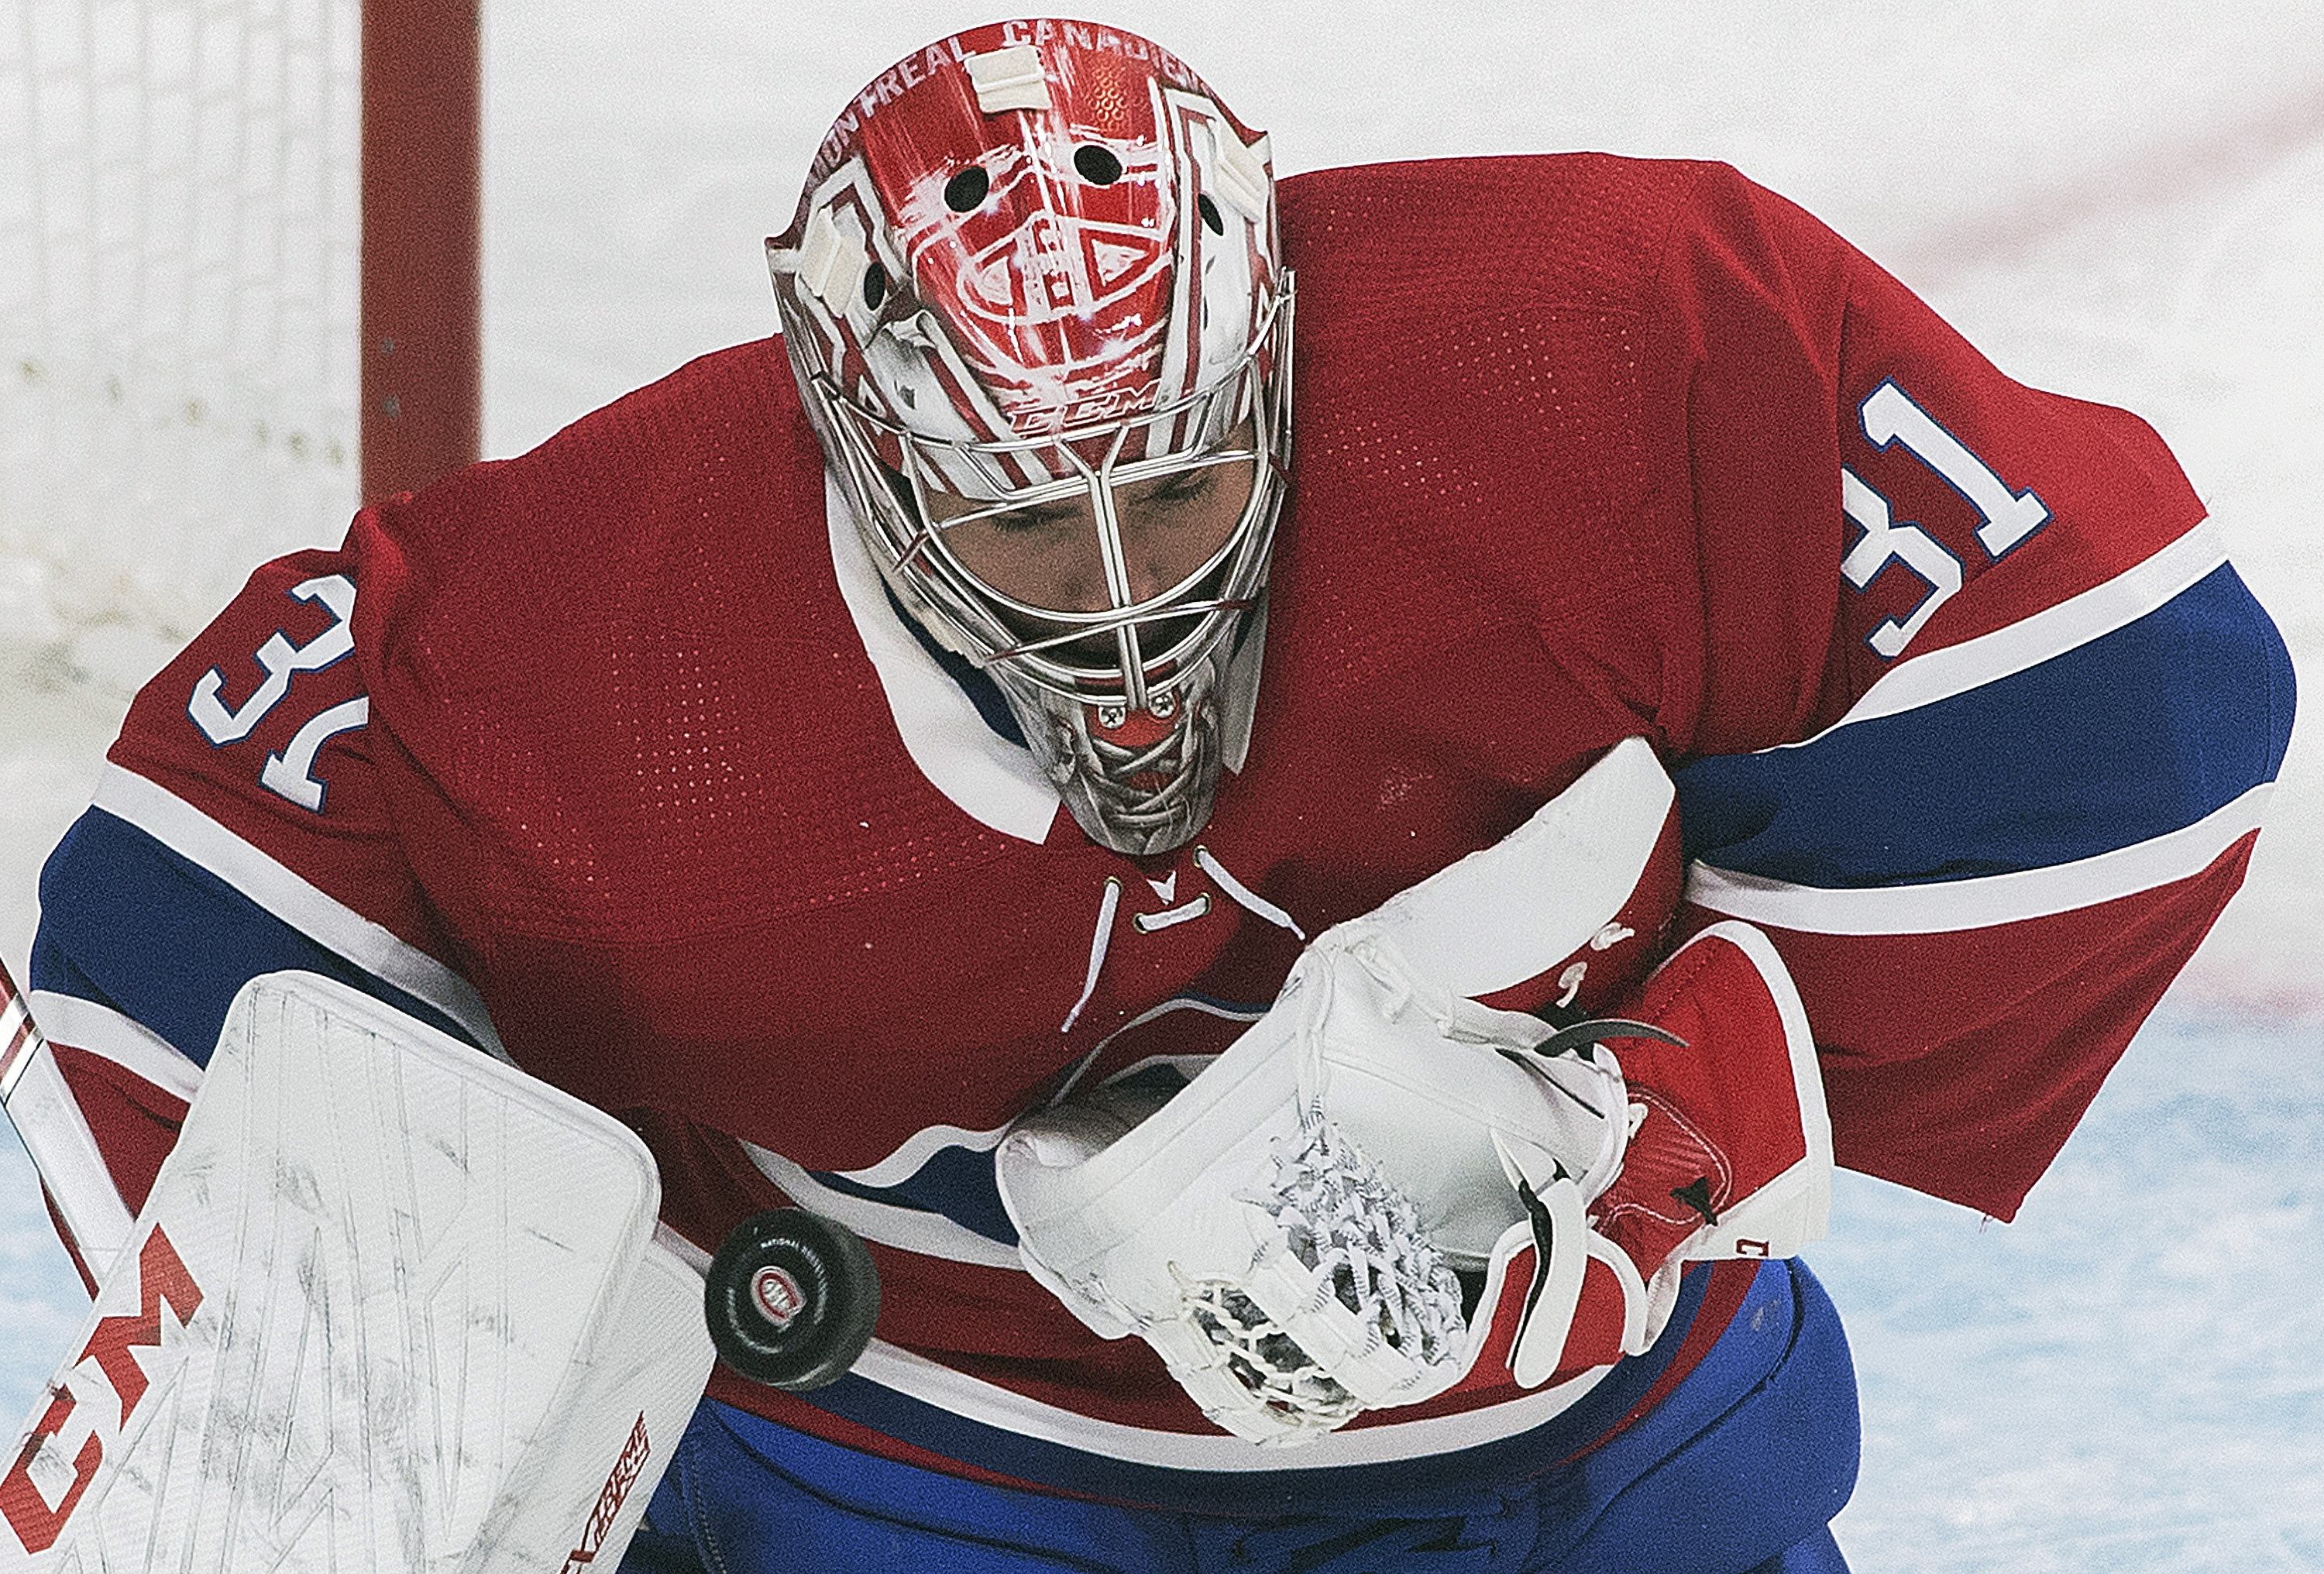 Bernier makes 42 saves, Red Wings beat Canadiens 2-1